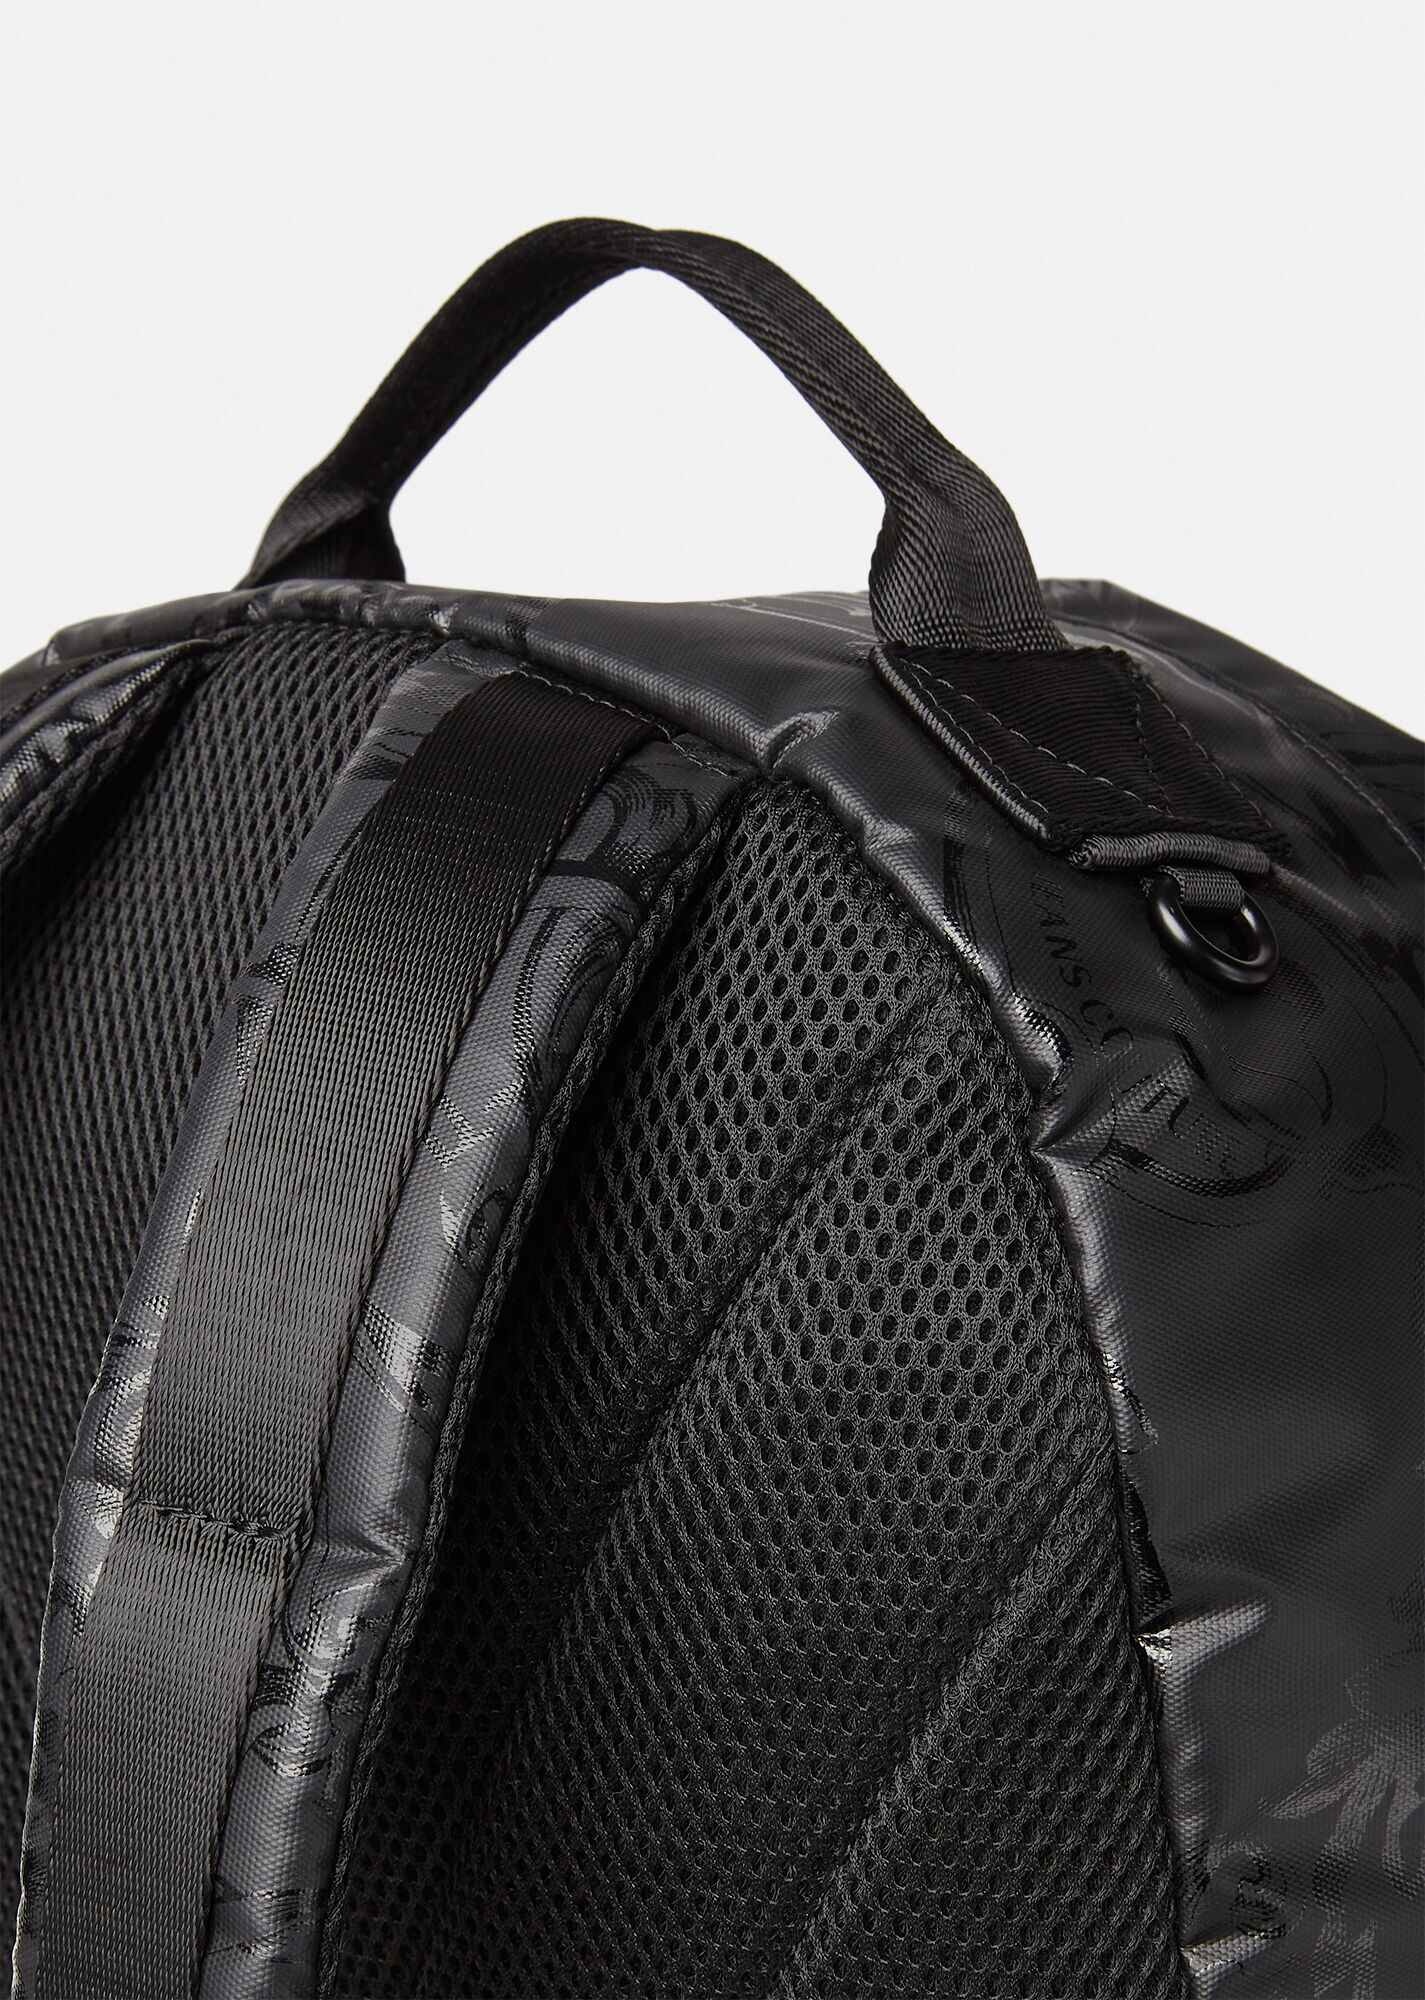 Regalia Baroque Backpack - 5